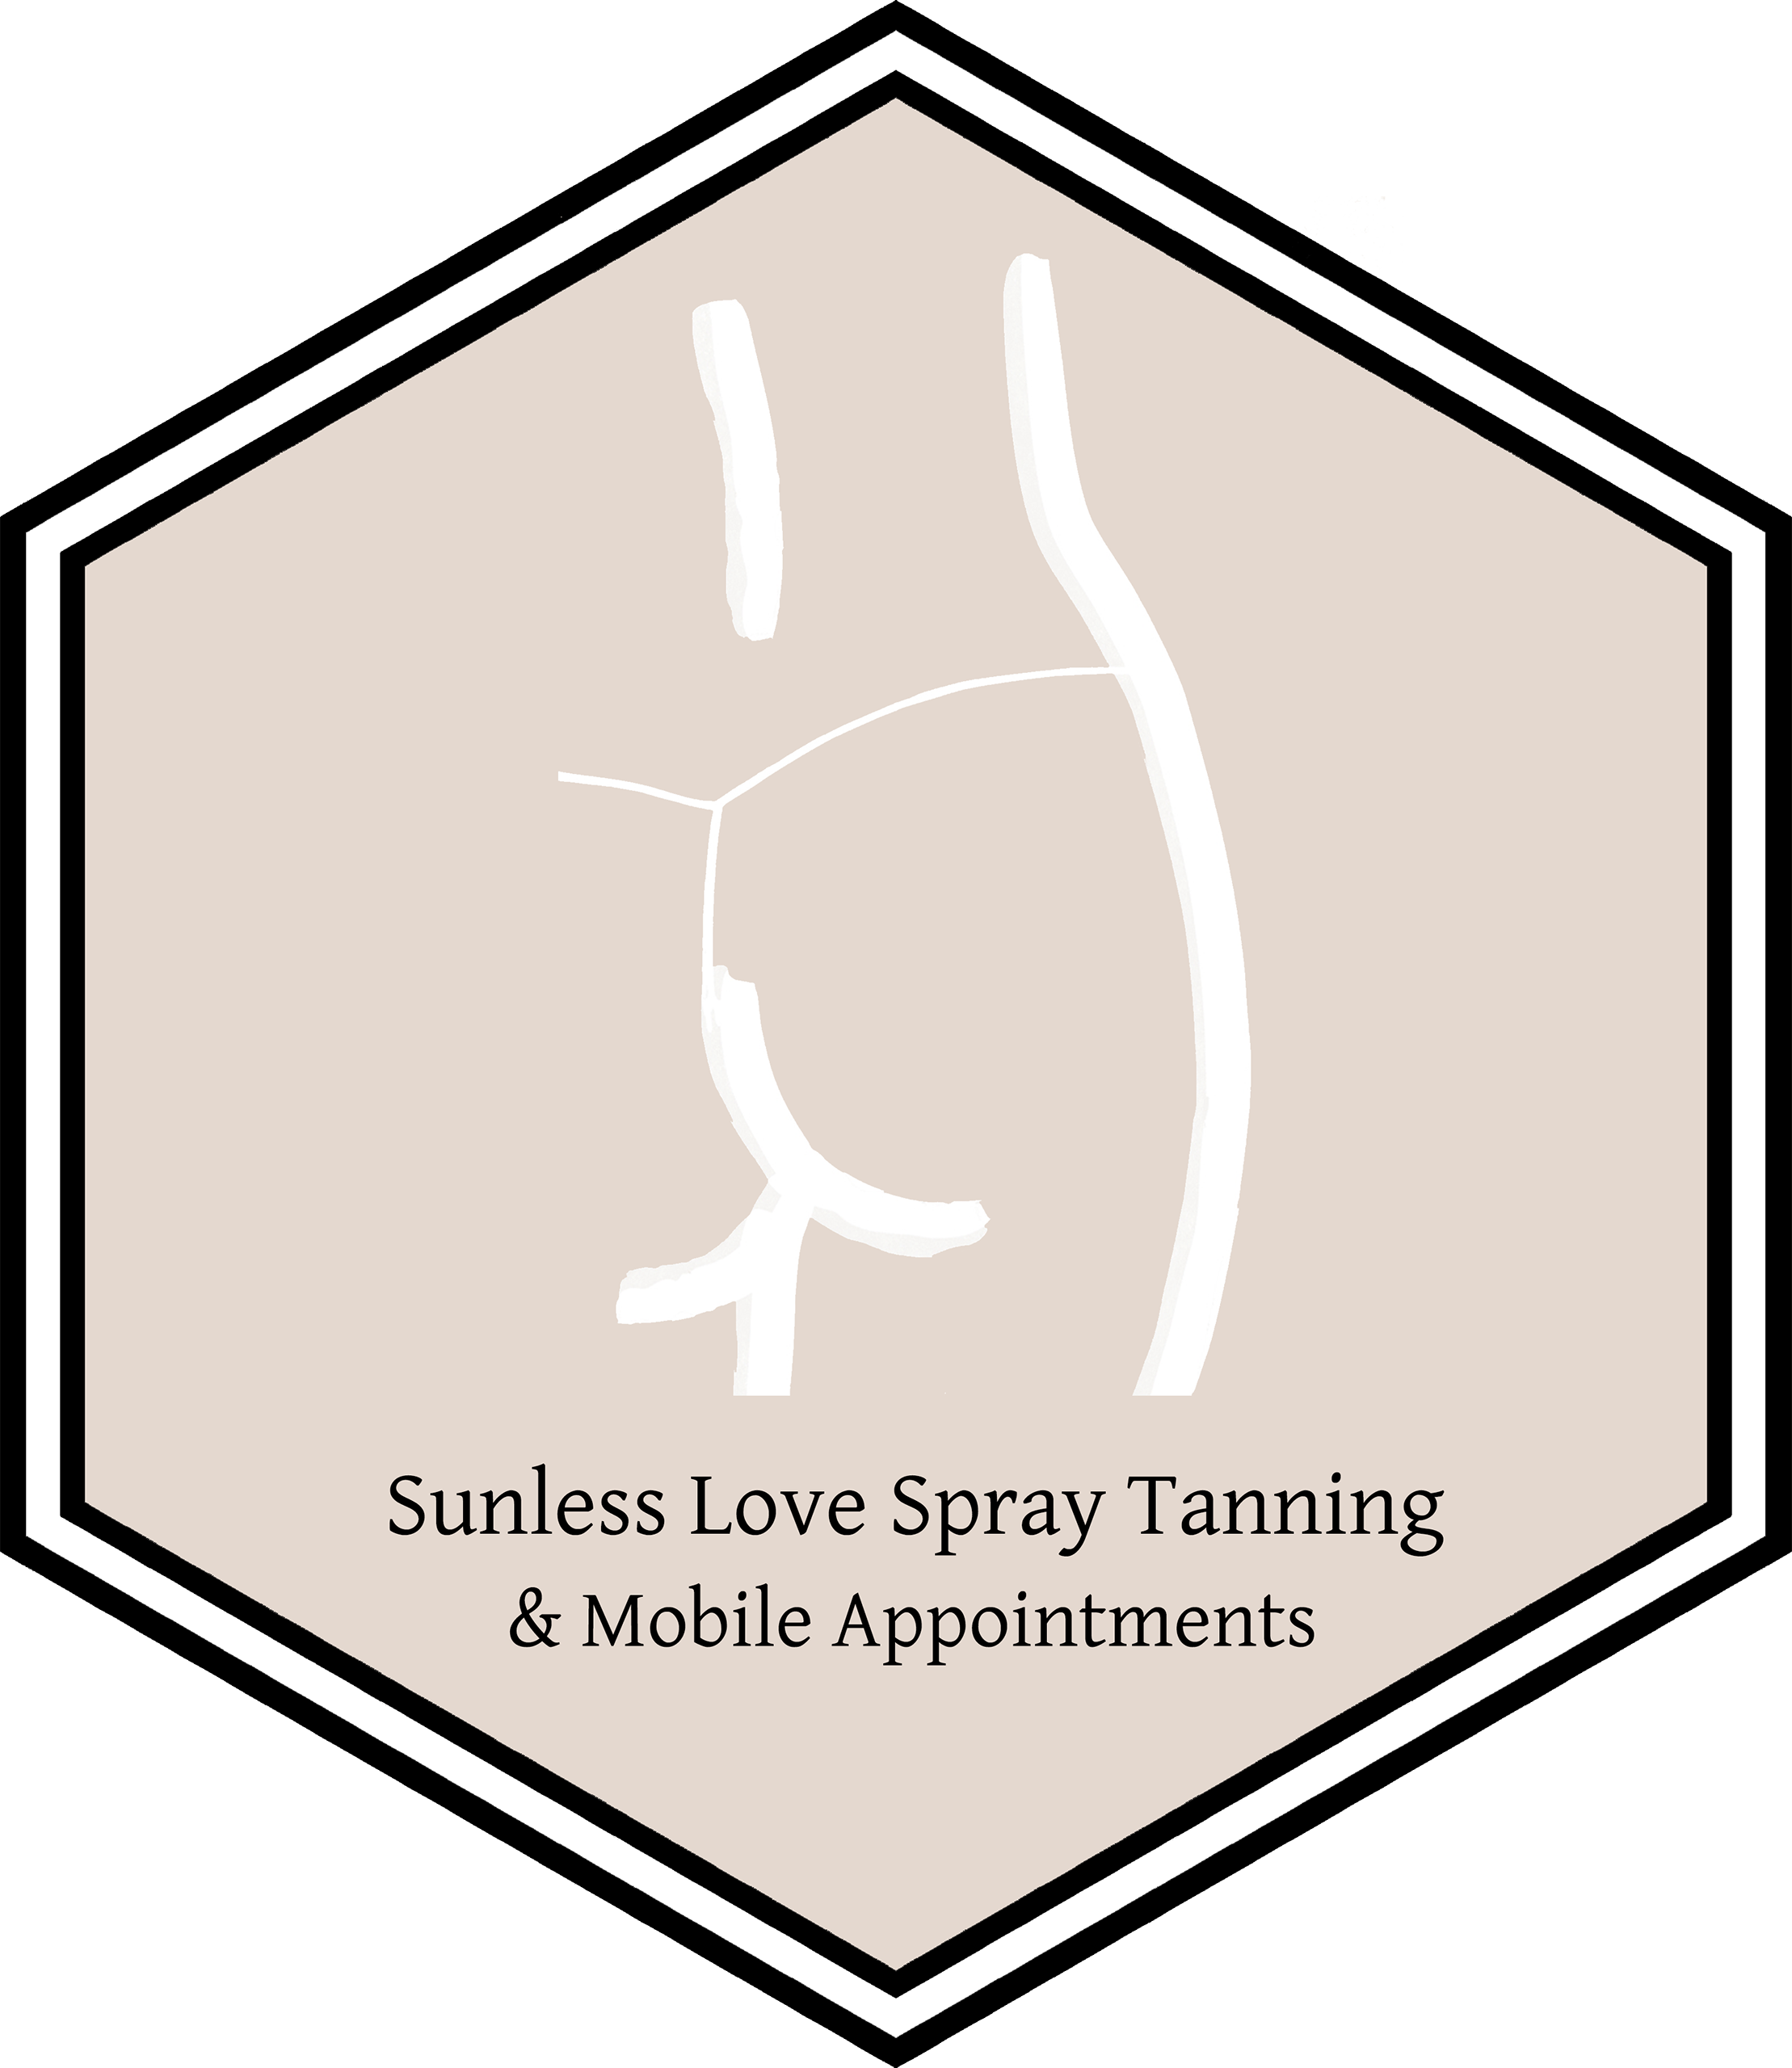 Sunless Love Spray Tanning